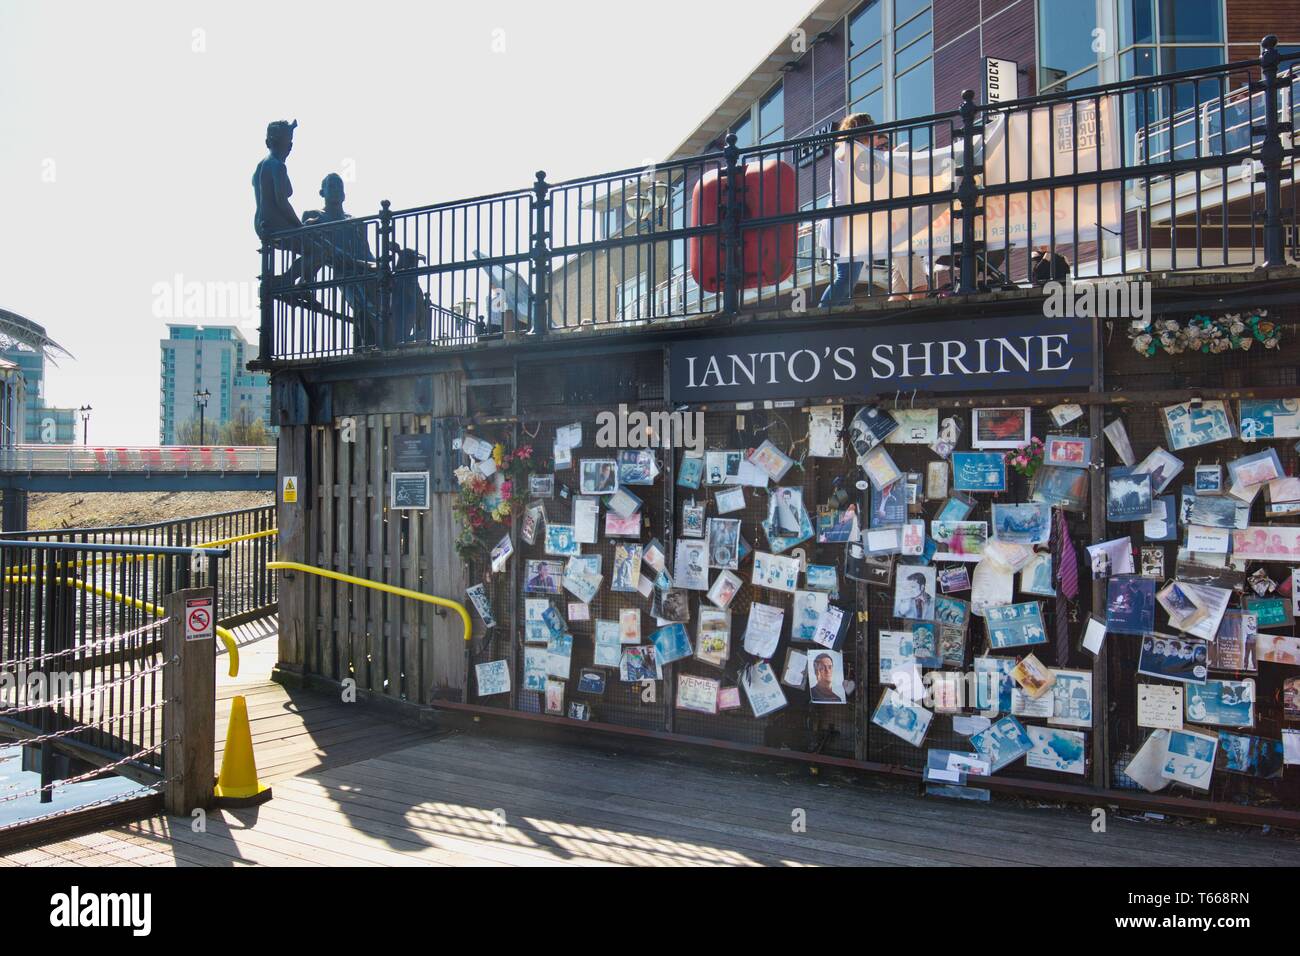 Ianto's Shrine and 'People Like Us' sculpture, Mermaid Quay, Cardiff Bay, Cardiff, Wales, United Kingdom. Stock Photo